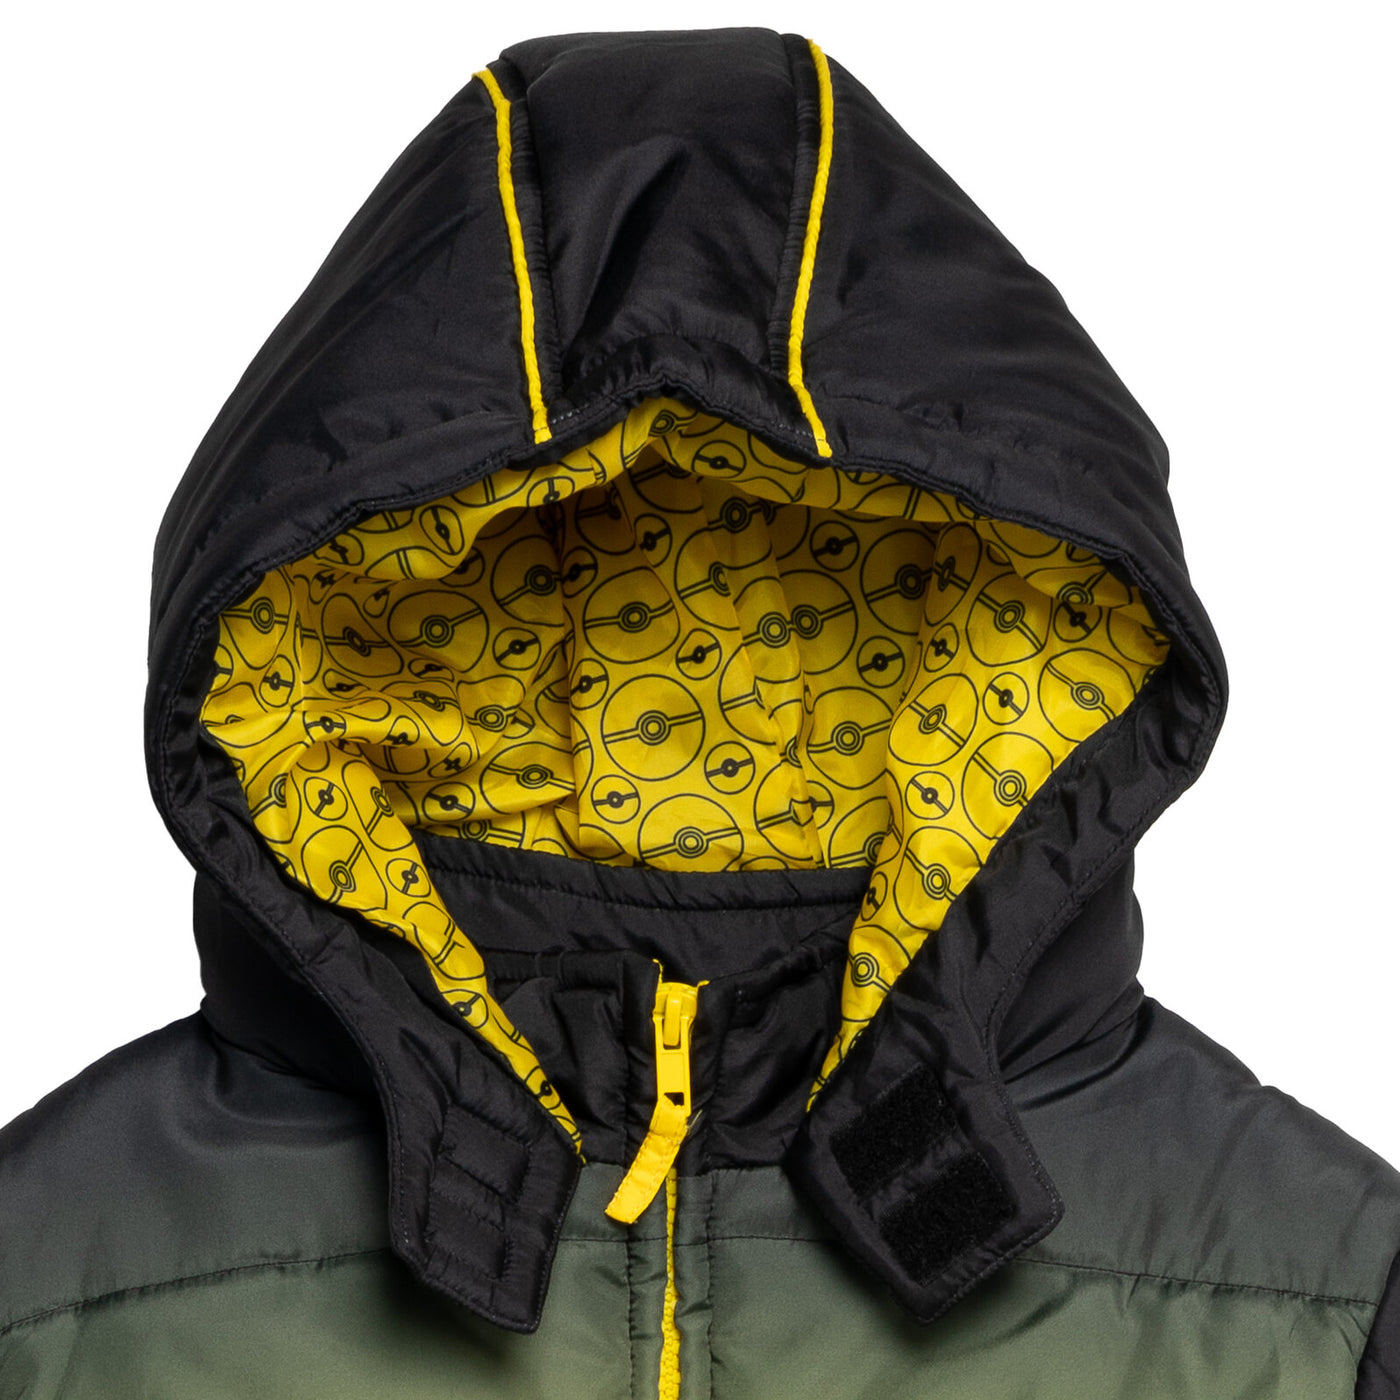 Pokemon Pikachu Zip Up Winter Coat Puffer Jacket